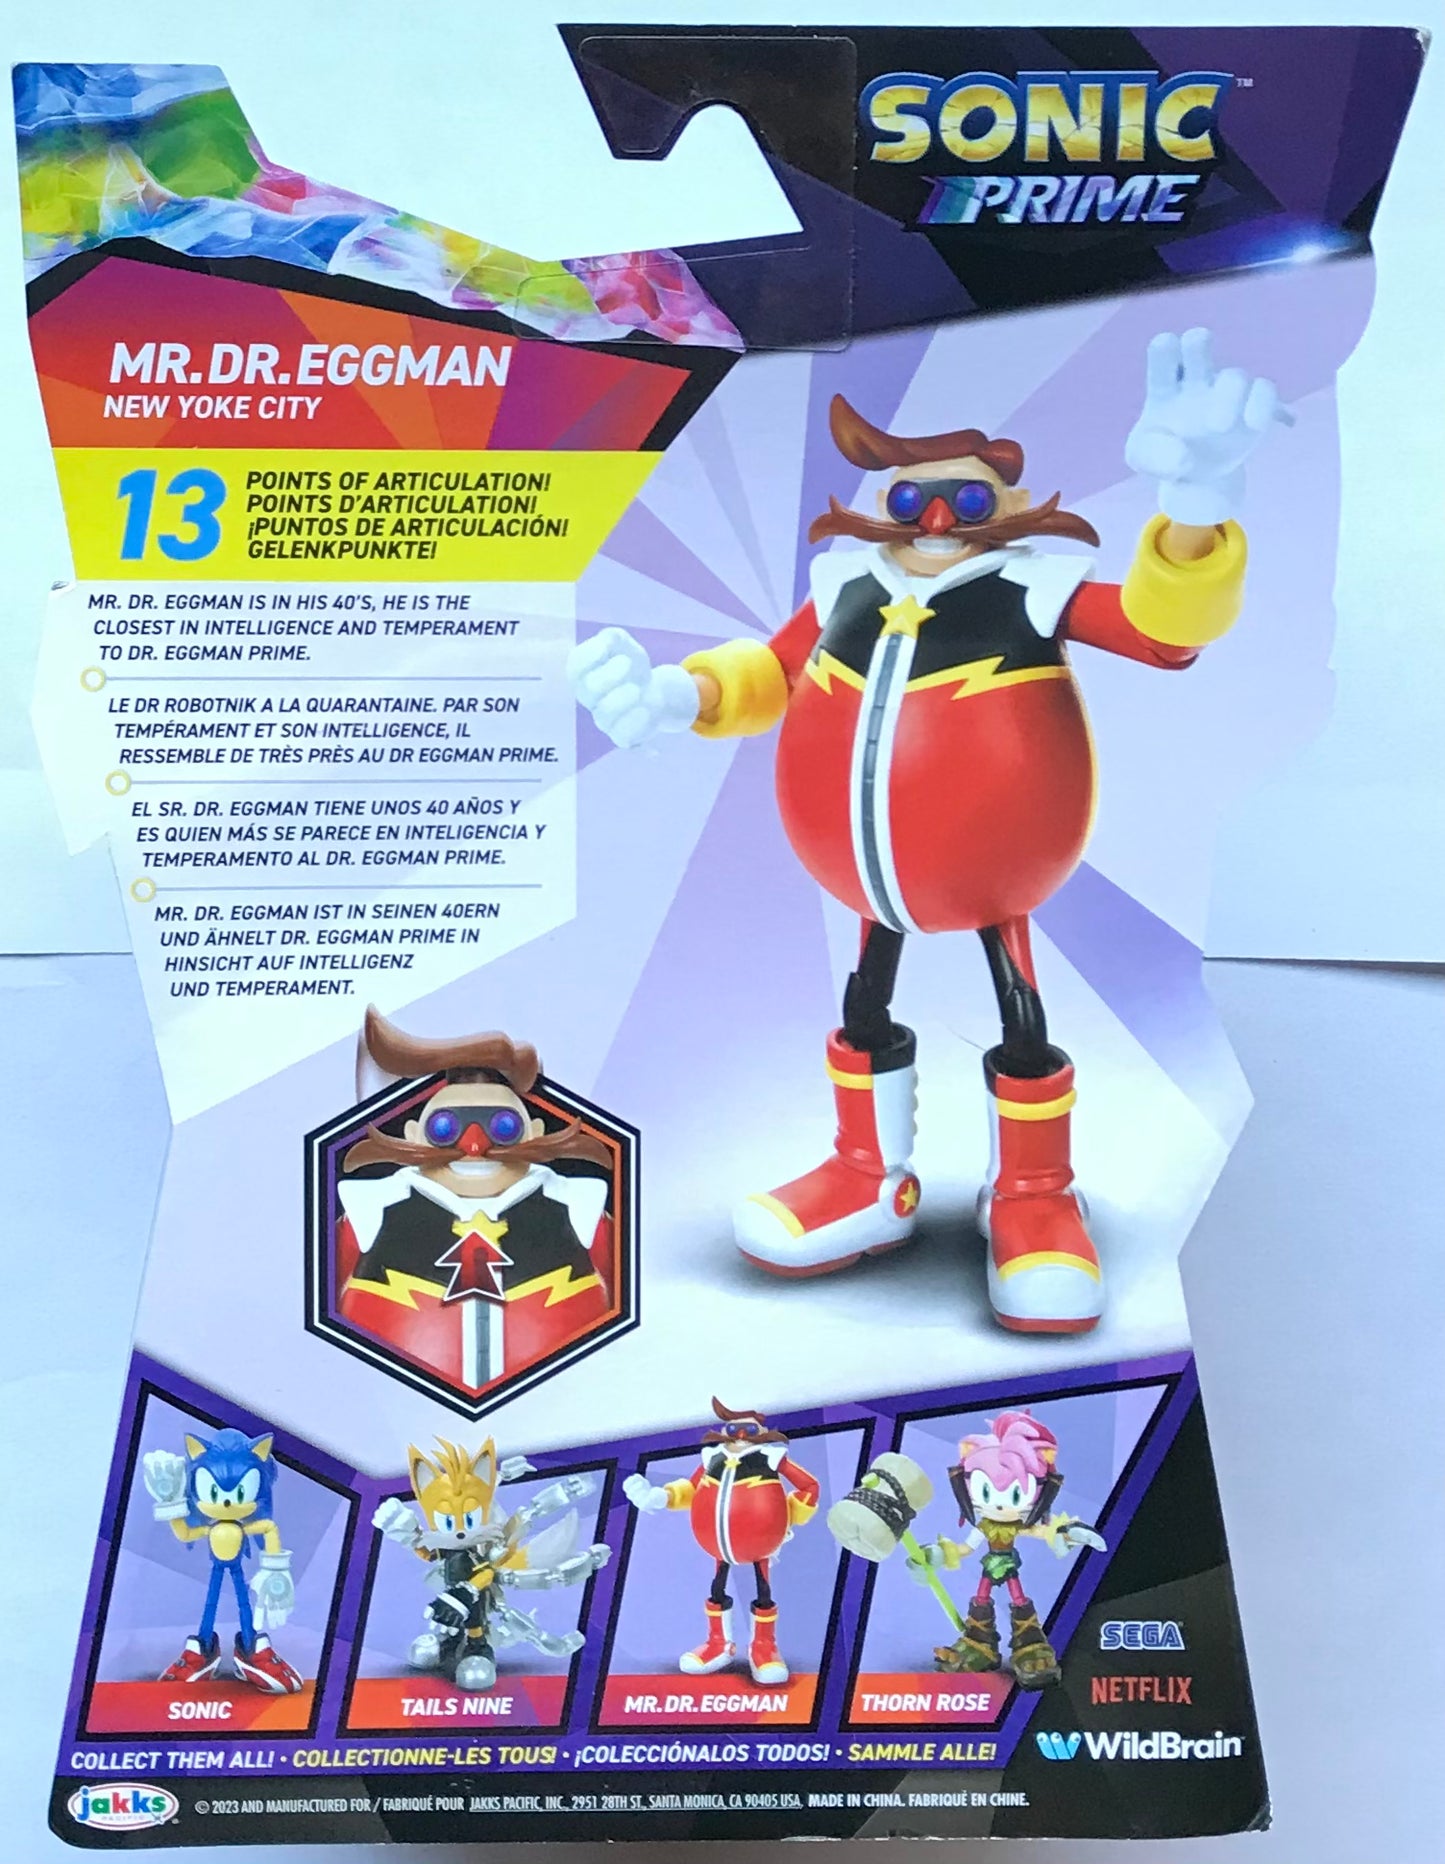 Jakks Netflix Sonic Prime Mr. Dr. Eggman New Yoke City 5” Inch Figure